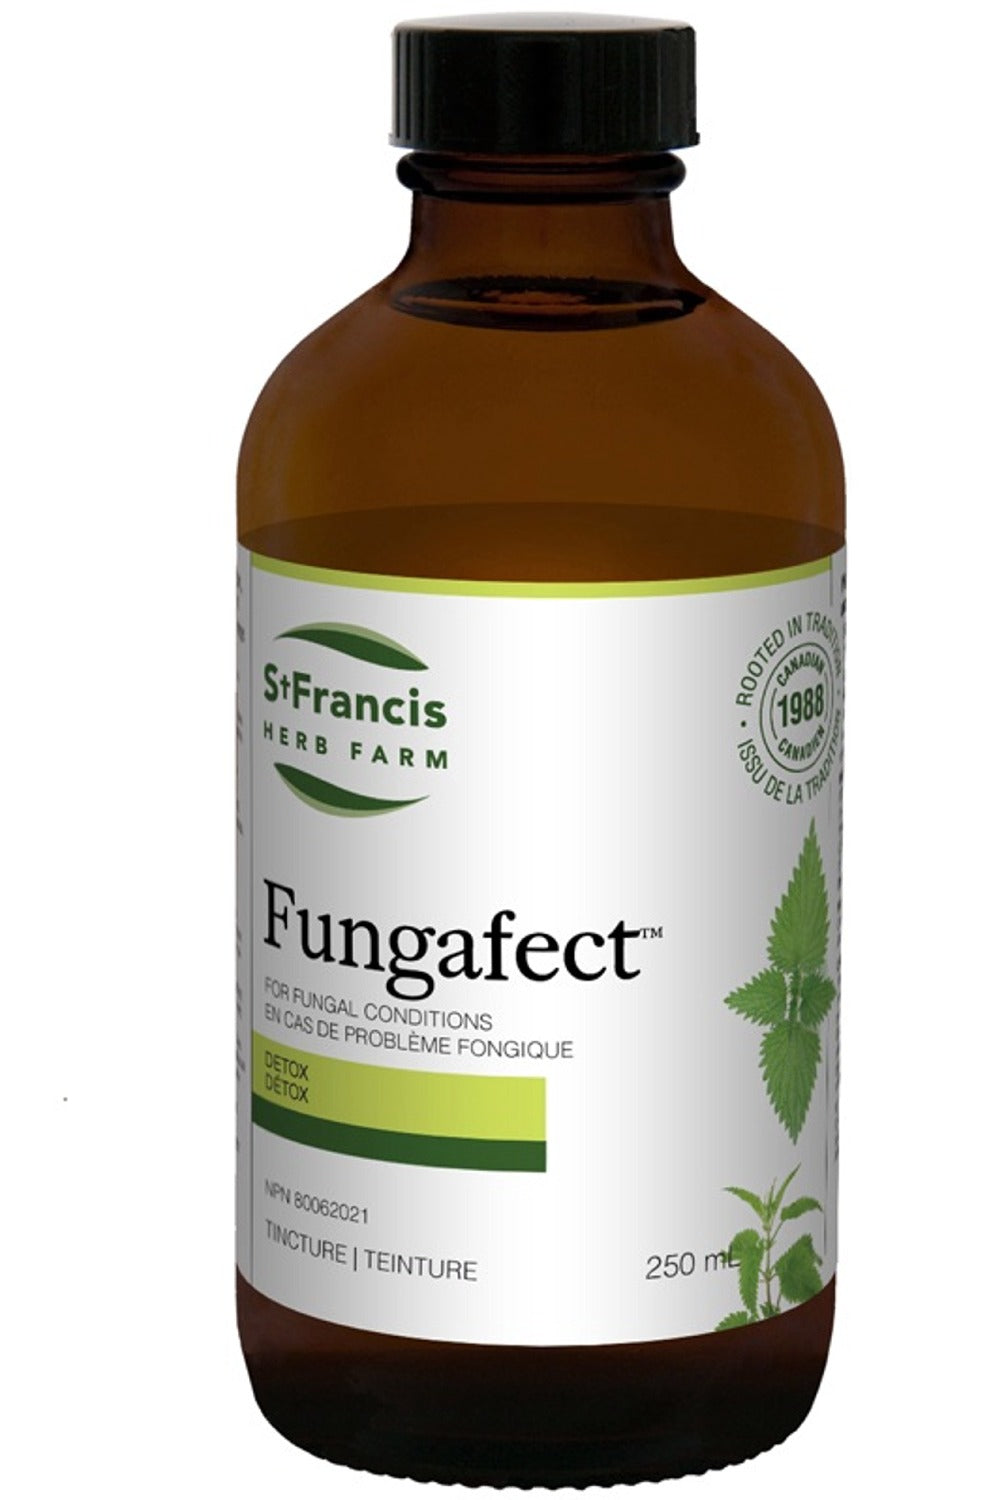 ST FRANCIS HERB FARM Fungafect (250 ml)